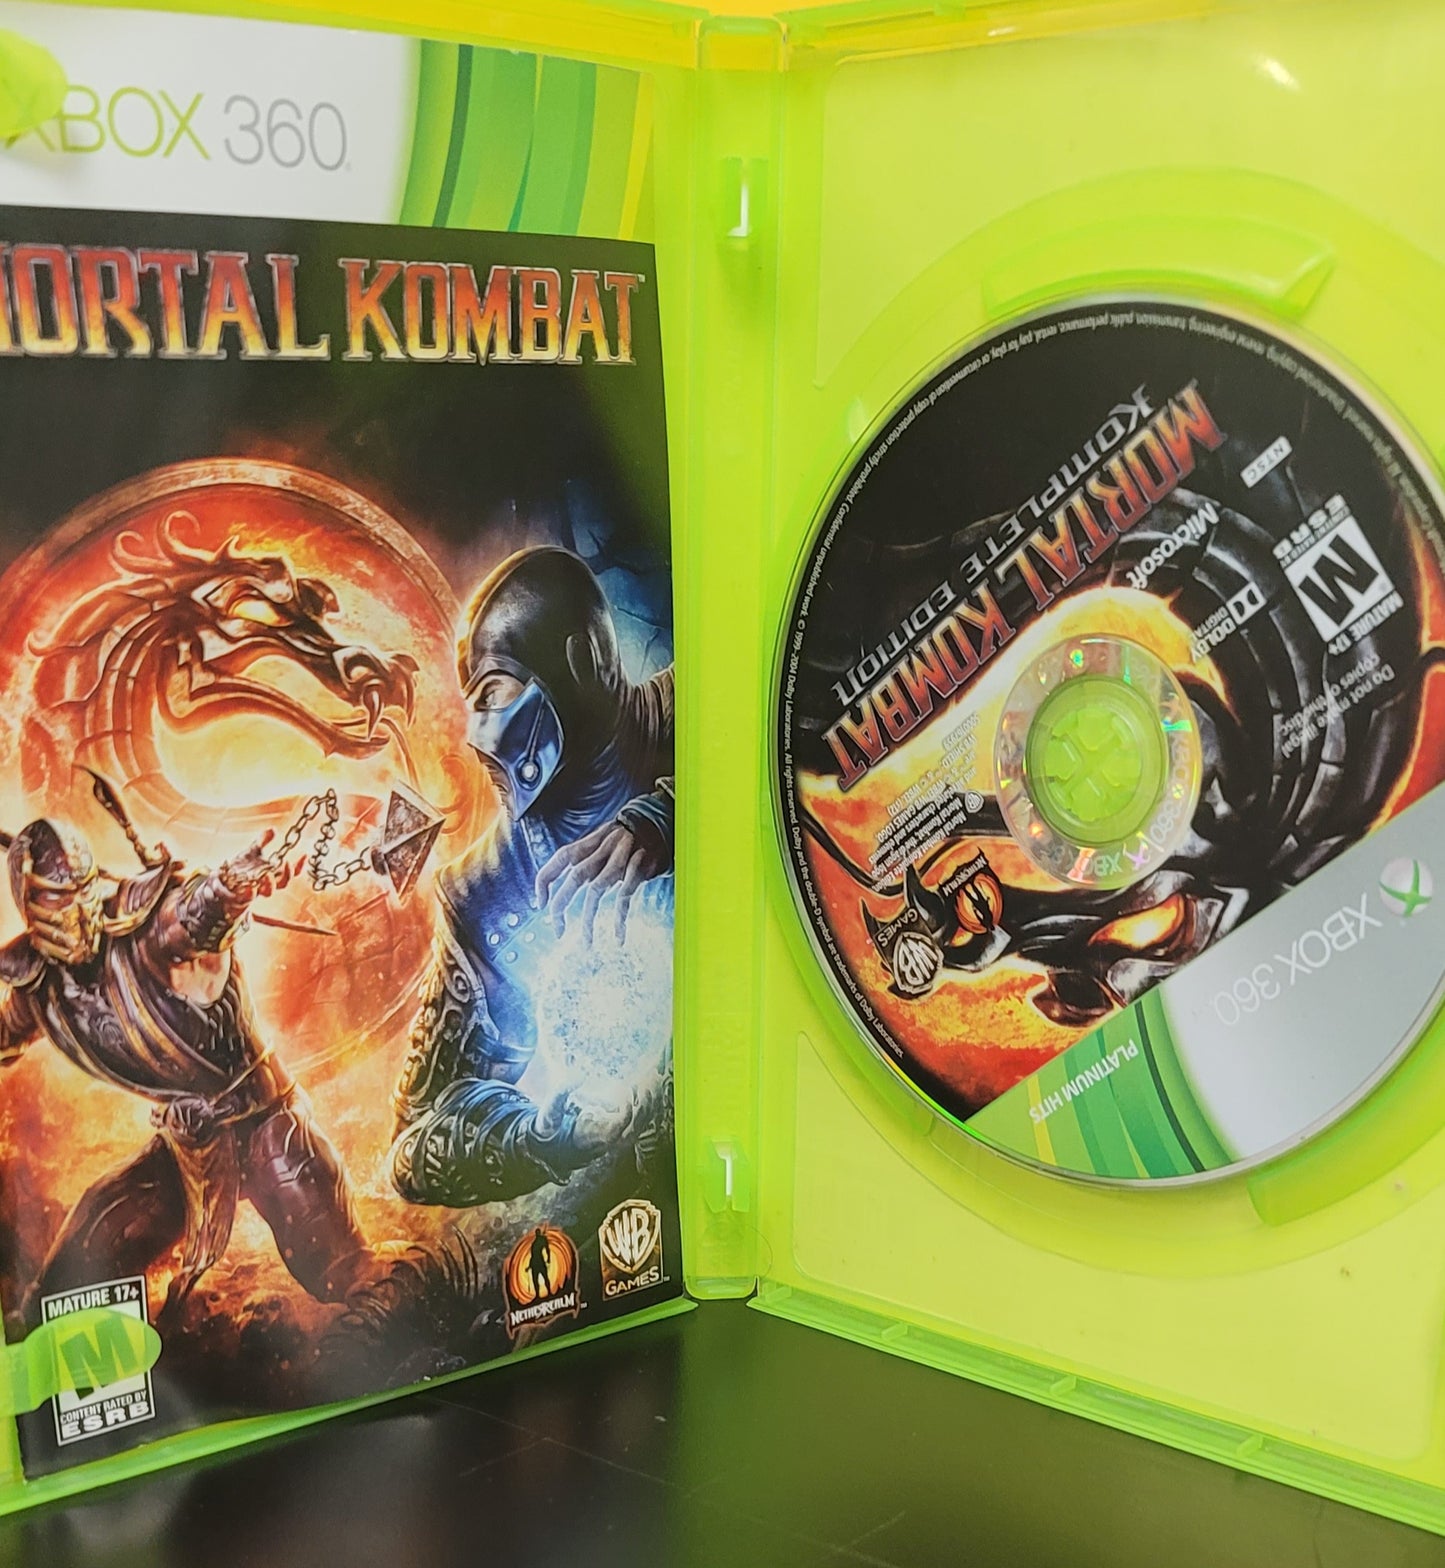 Mortal Kombat Komplete Edition - Xb360 - Used